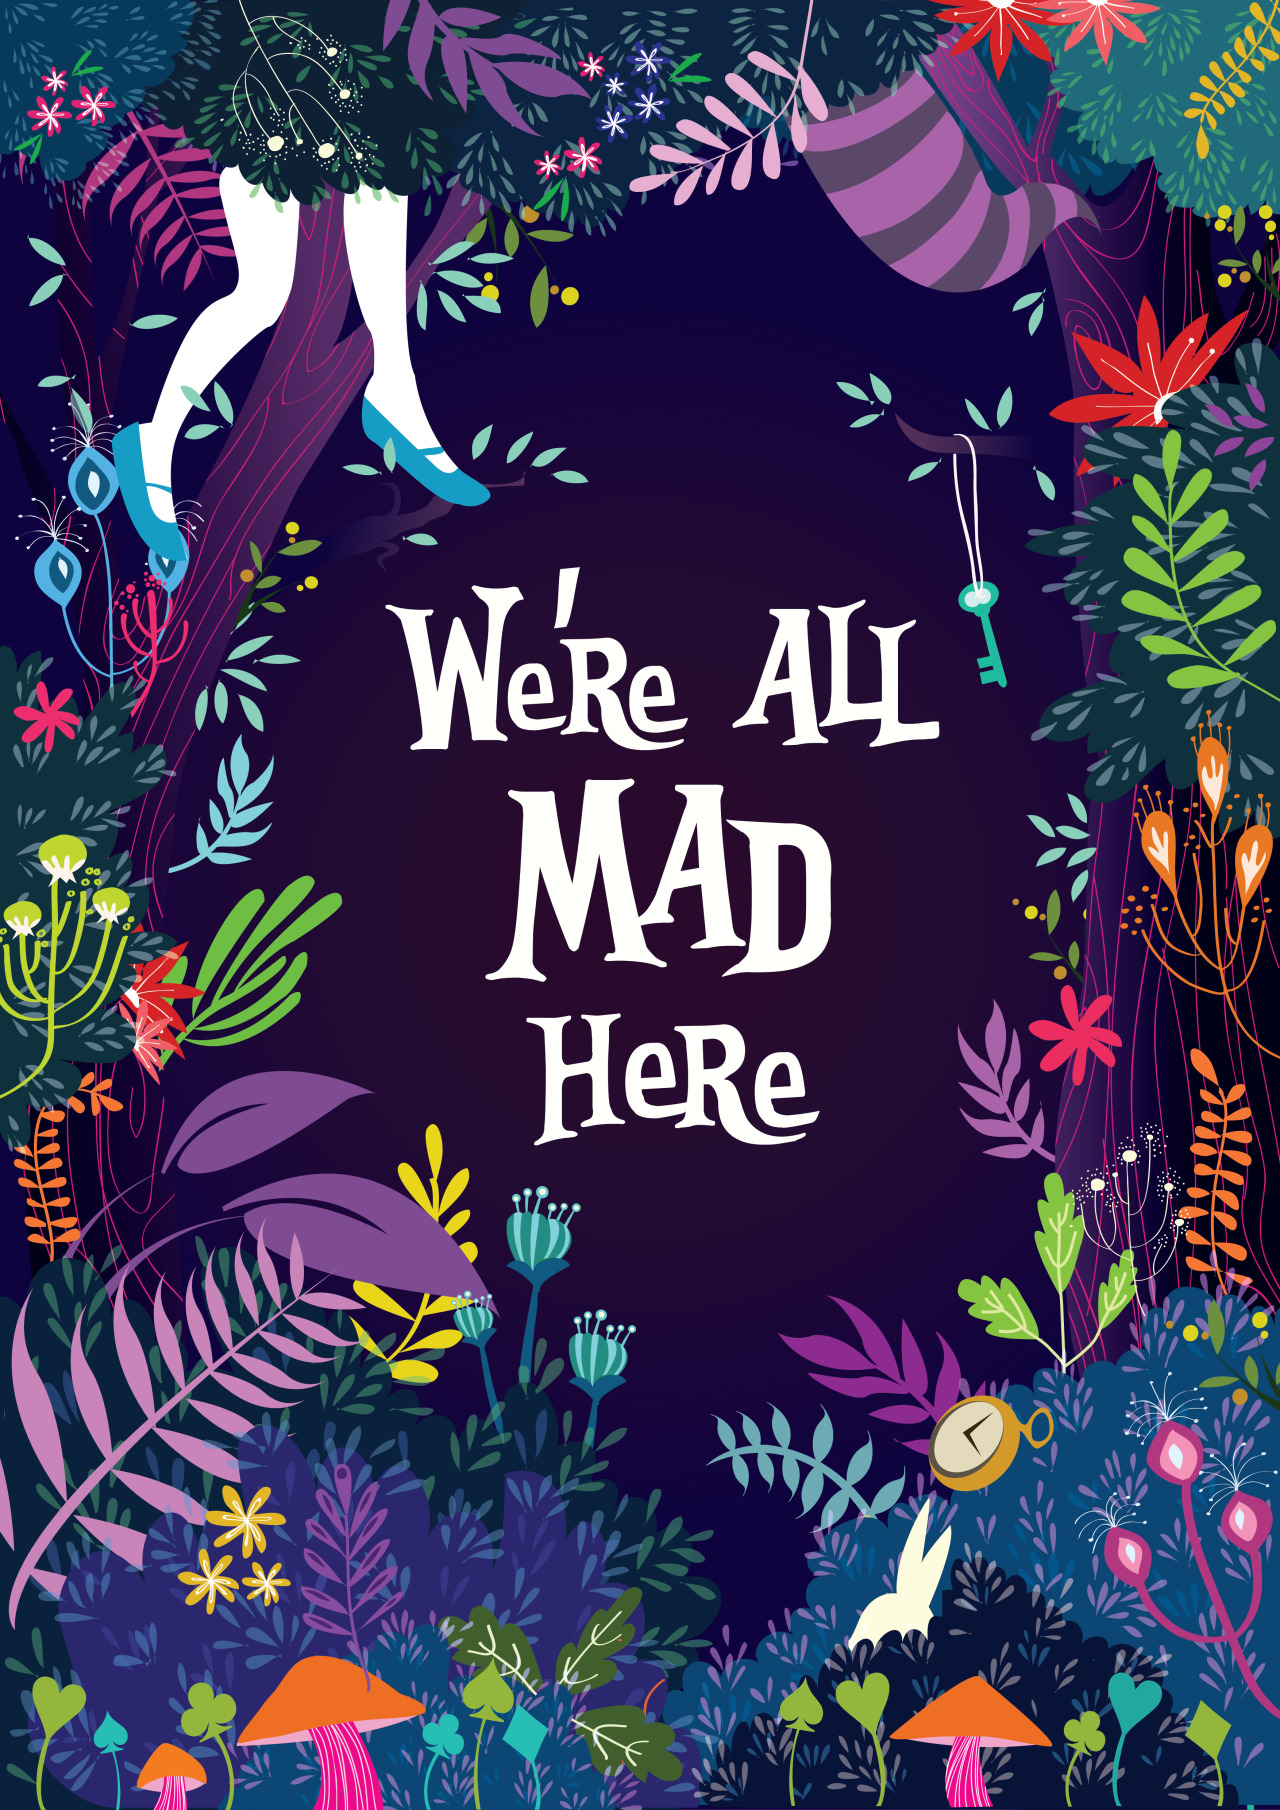 “We’re all mad here.” by Princess So tumblr: soprincessdanielle.tumblr.com instagram: @cessypoop